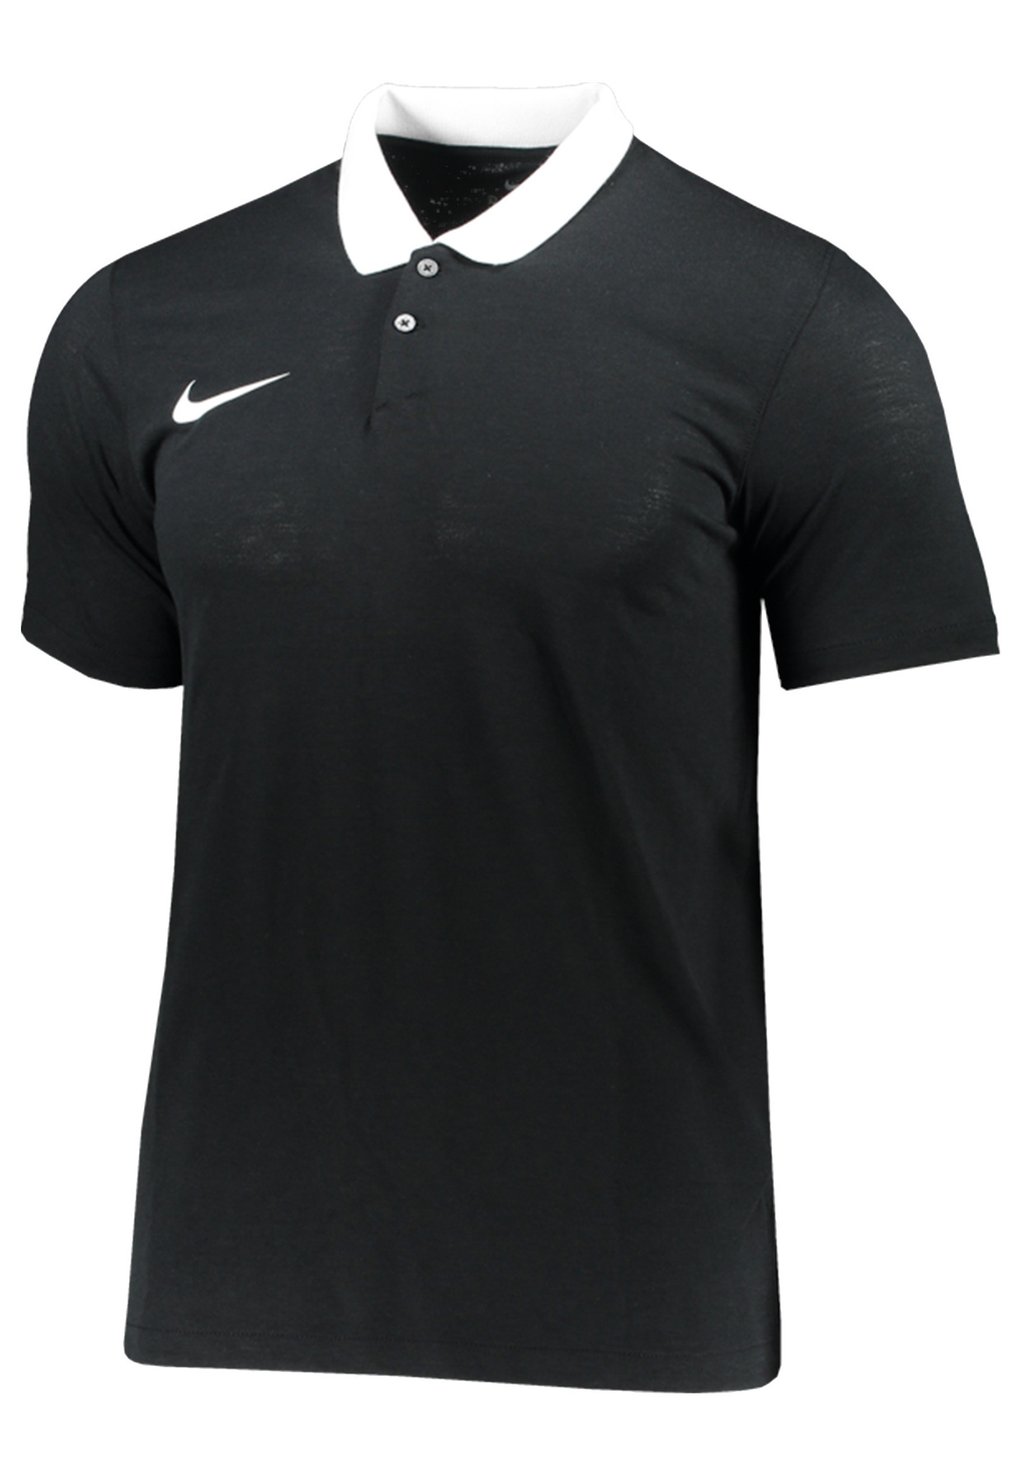 Спортивная футболка PARK Nike, цвет schwarzweiss футболка базовая teamsport nike цвет schwarzweiss